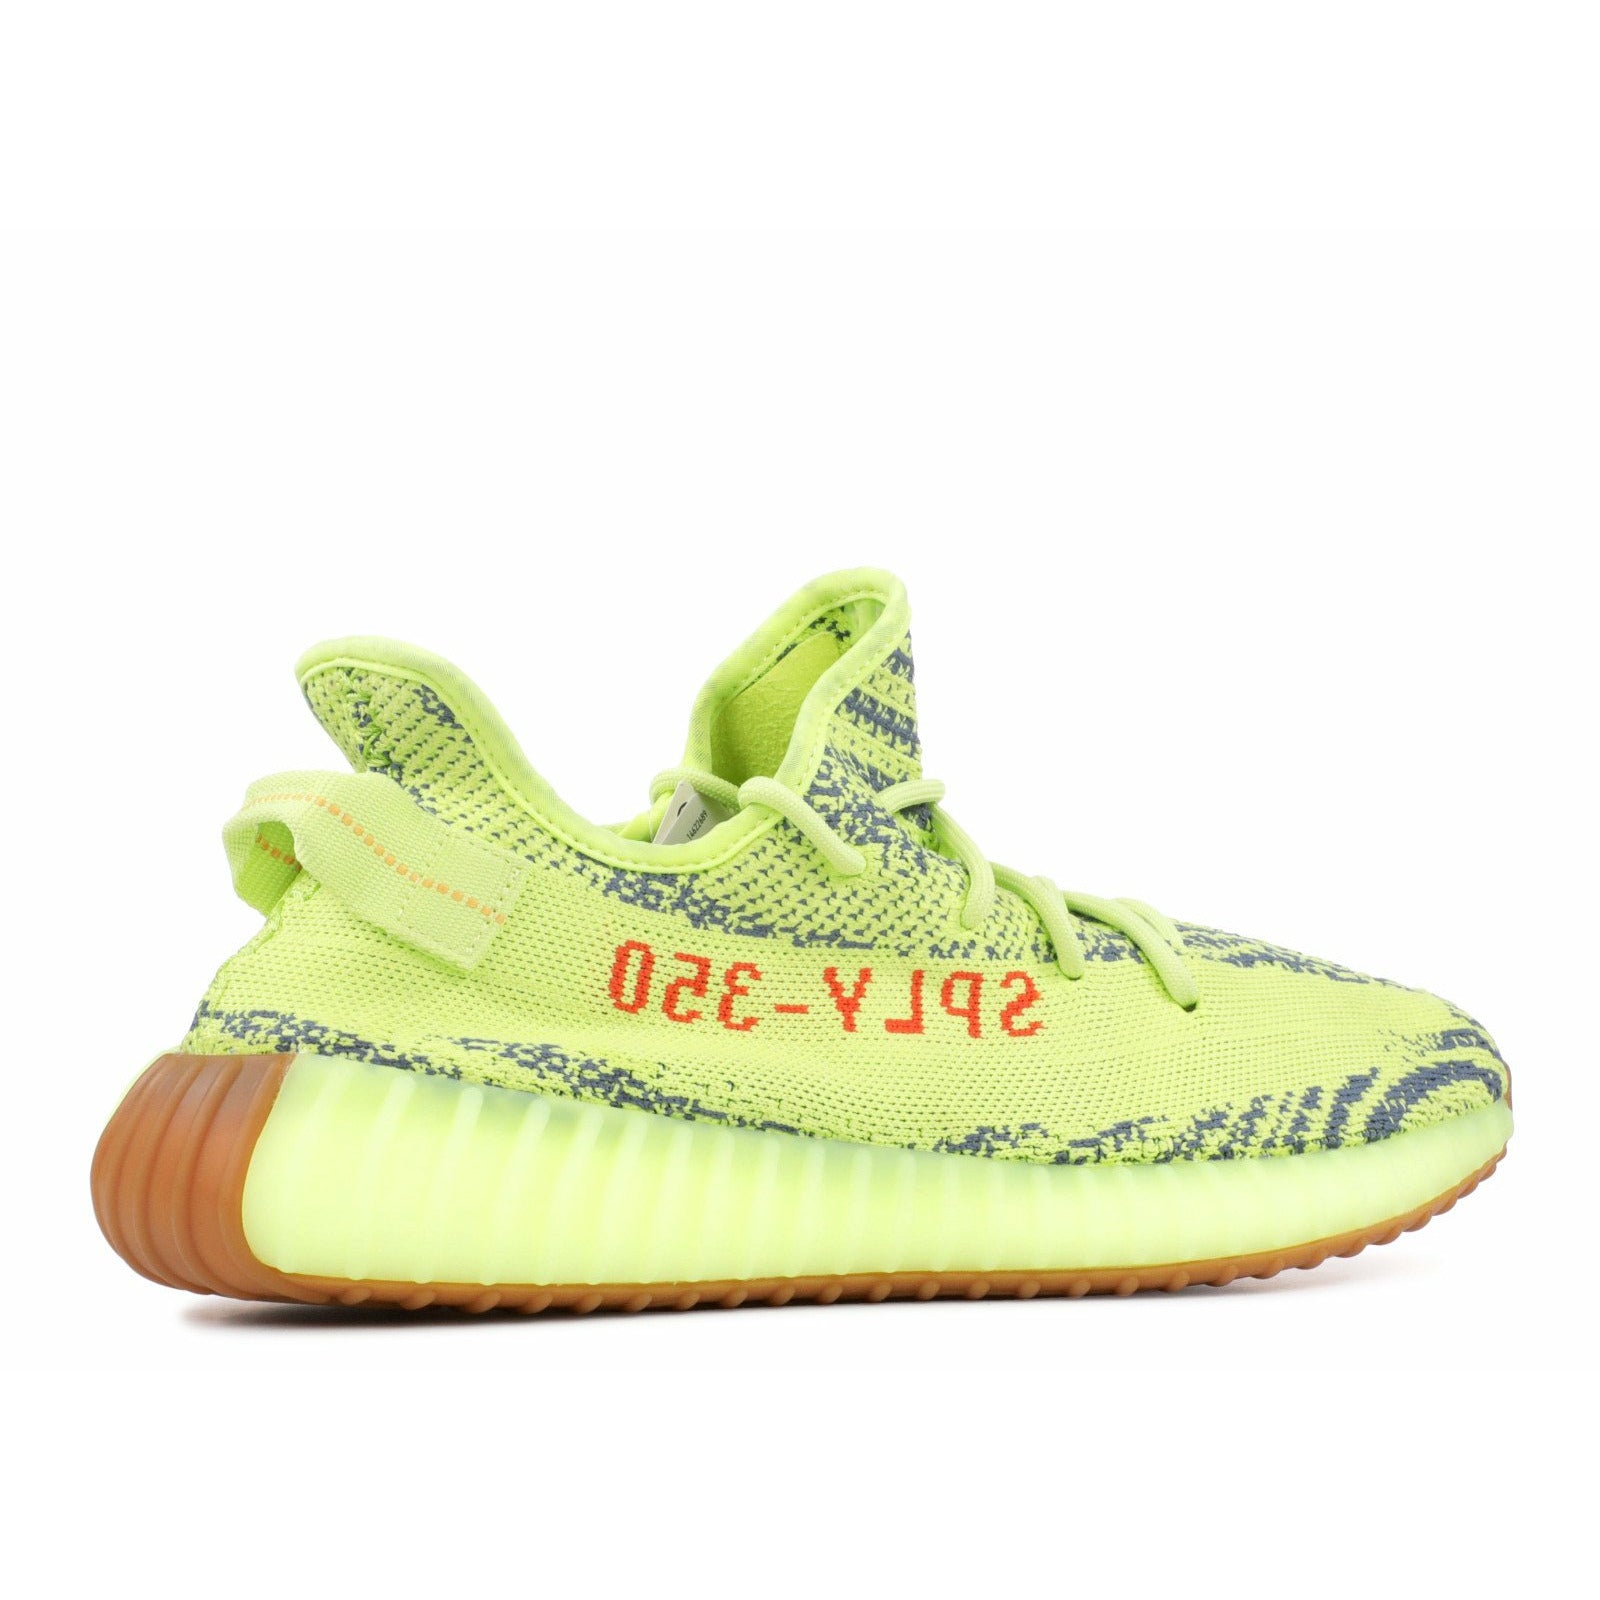 cortina Equivalente Mujer Adidas Yeezy Boost 350 V2 "Frozen Yellow" - B37572 | MrSneaker - mrsneaker